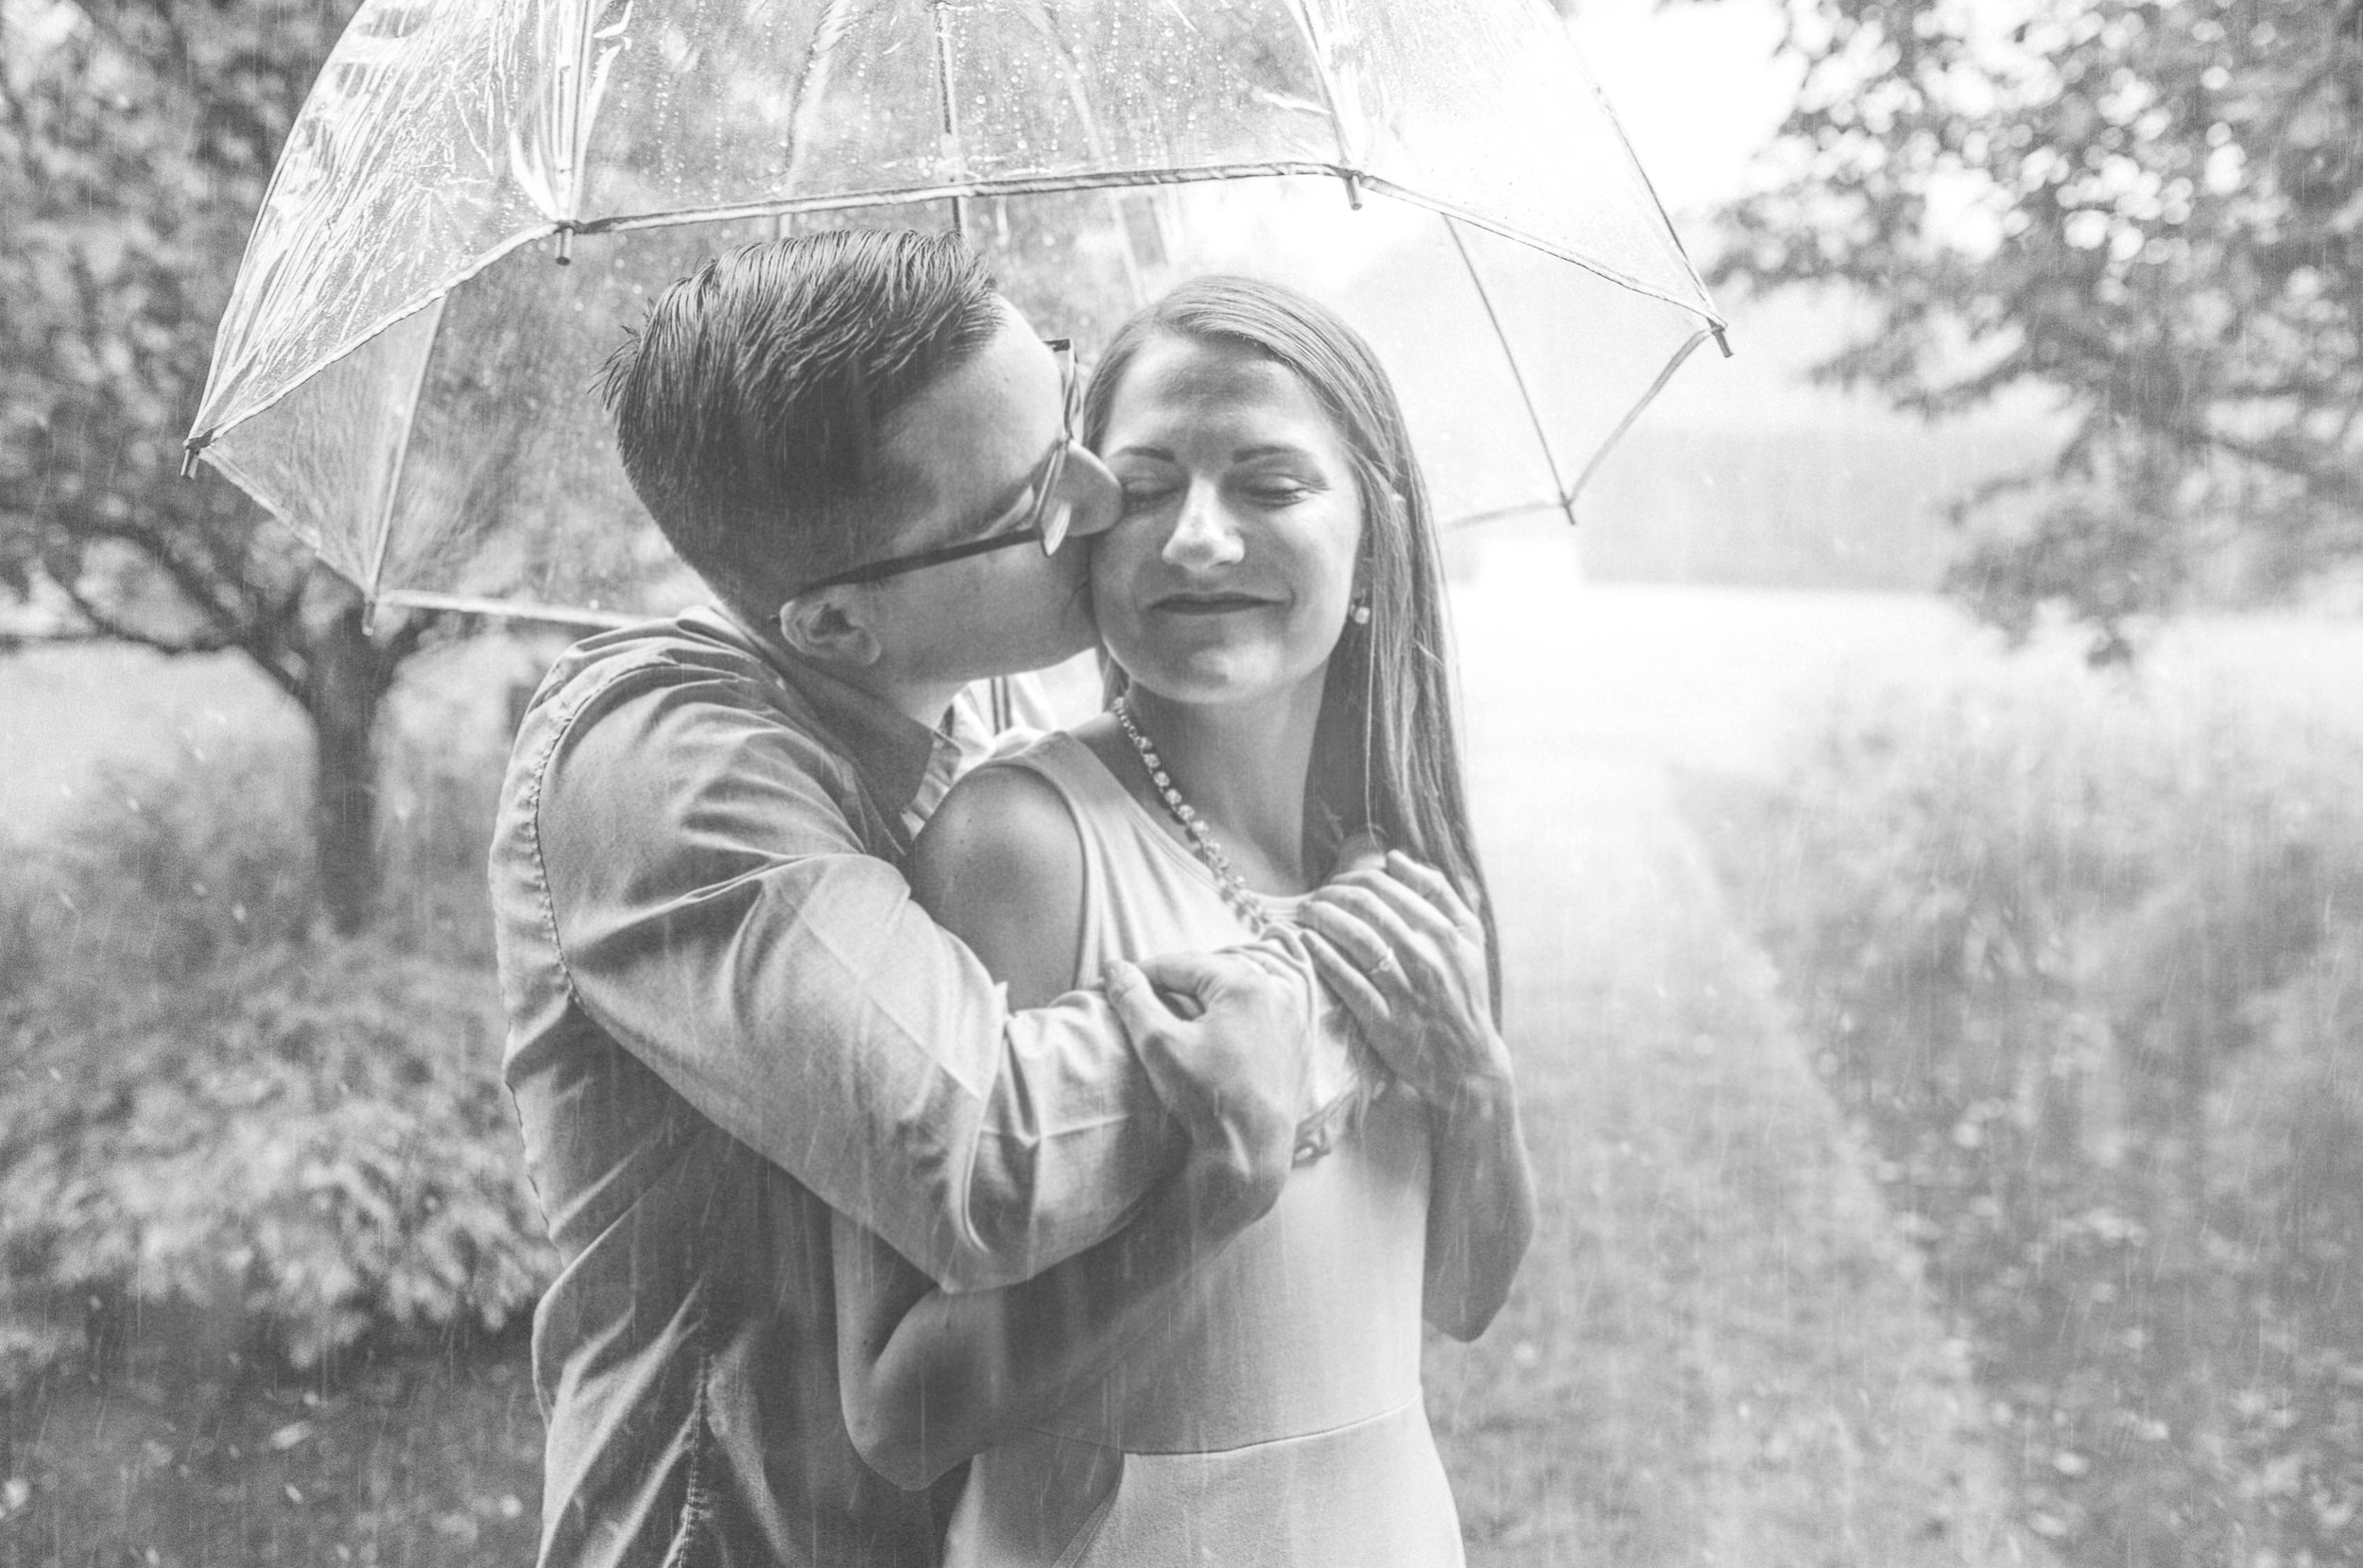 Johnstown Pittsburgh PA engagement session romantic rain couple portraits (14).jpg